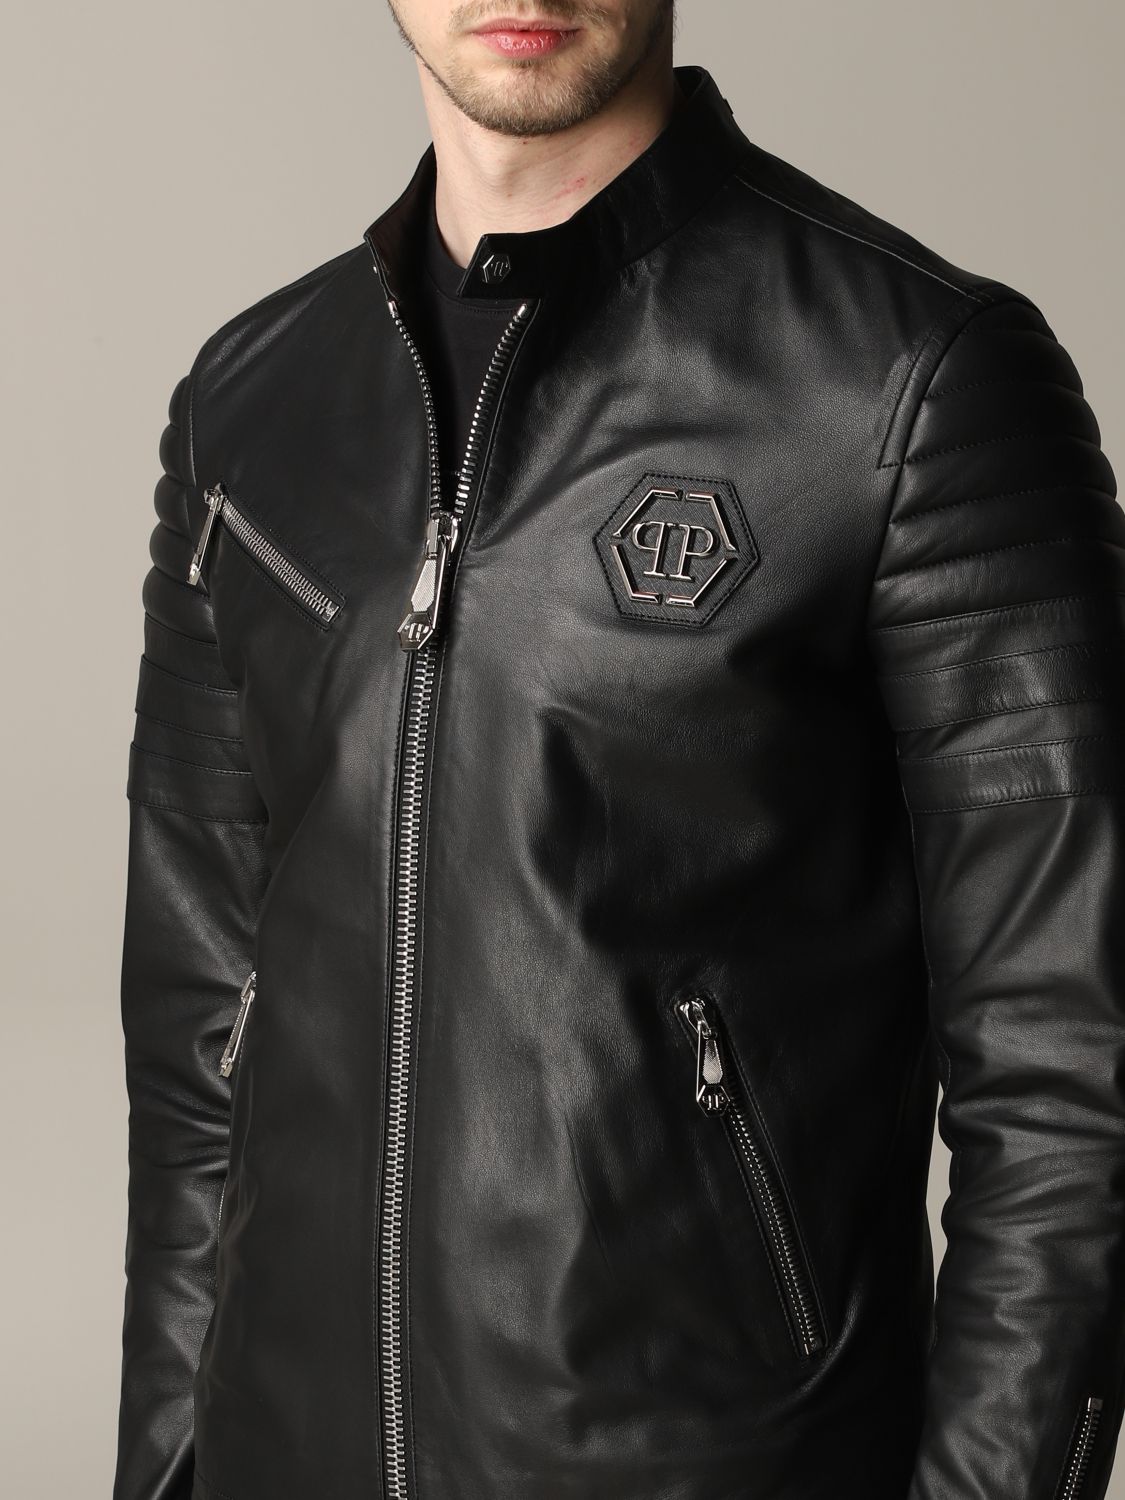 philipp plein leather jacket price